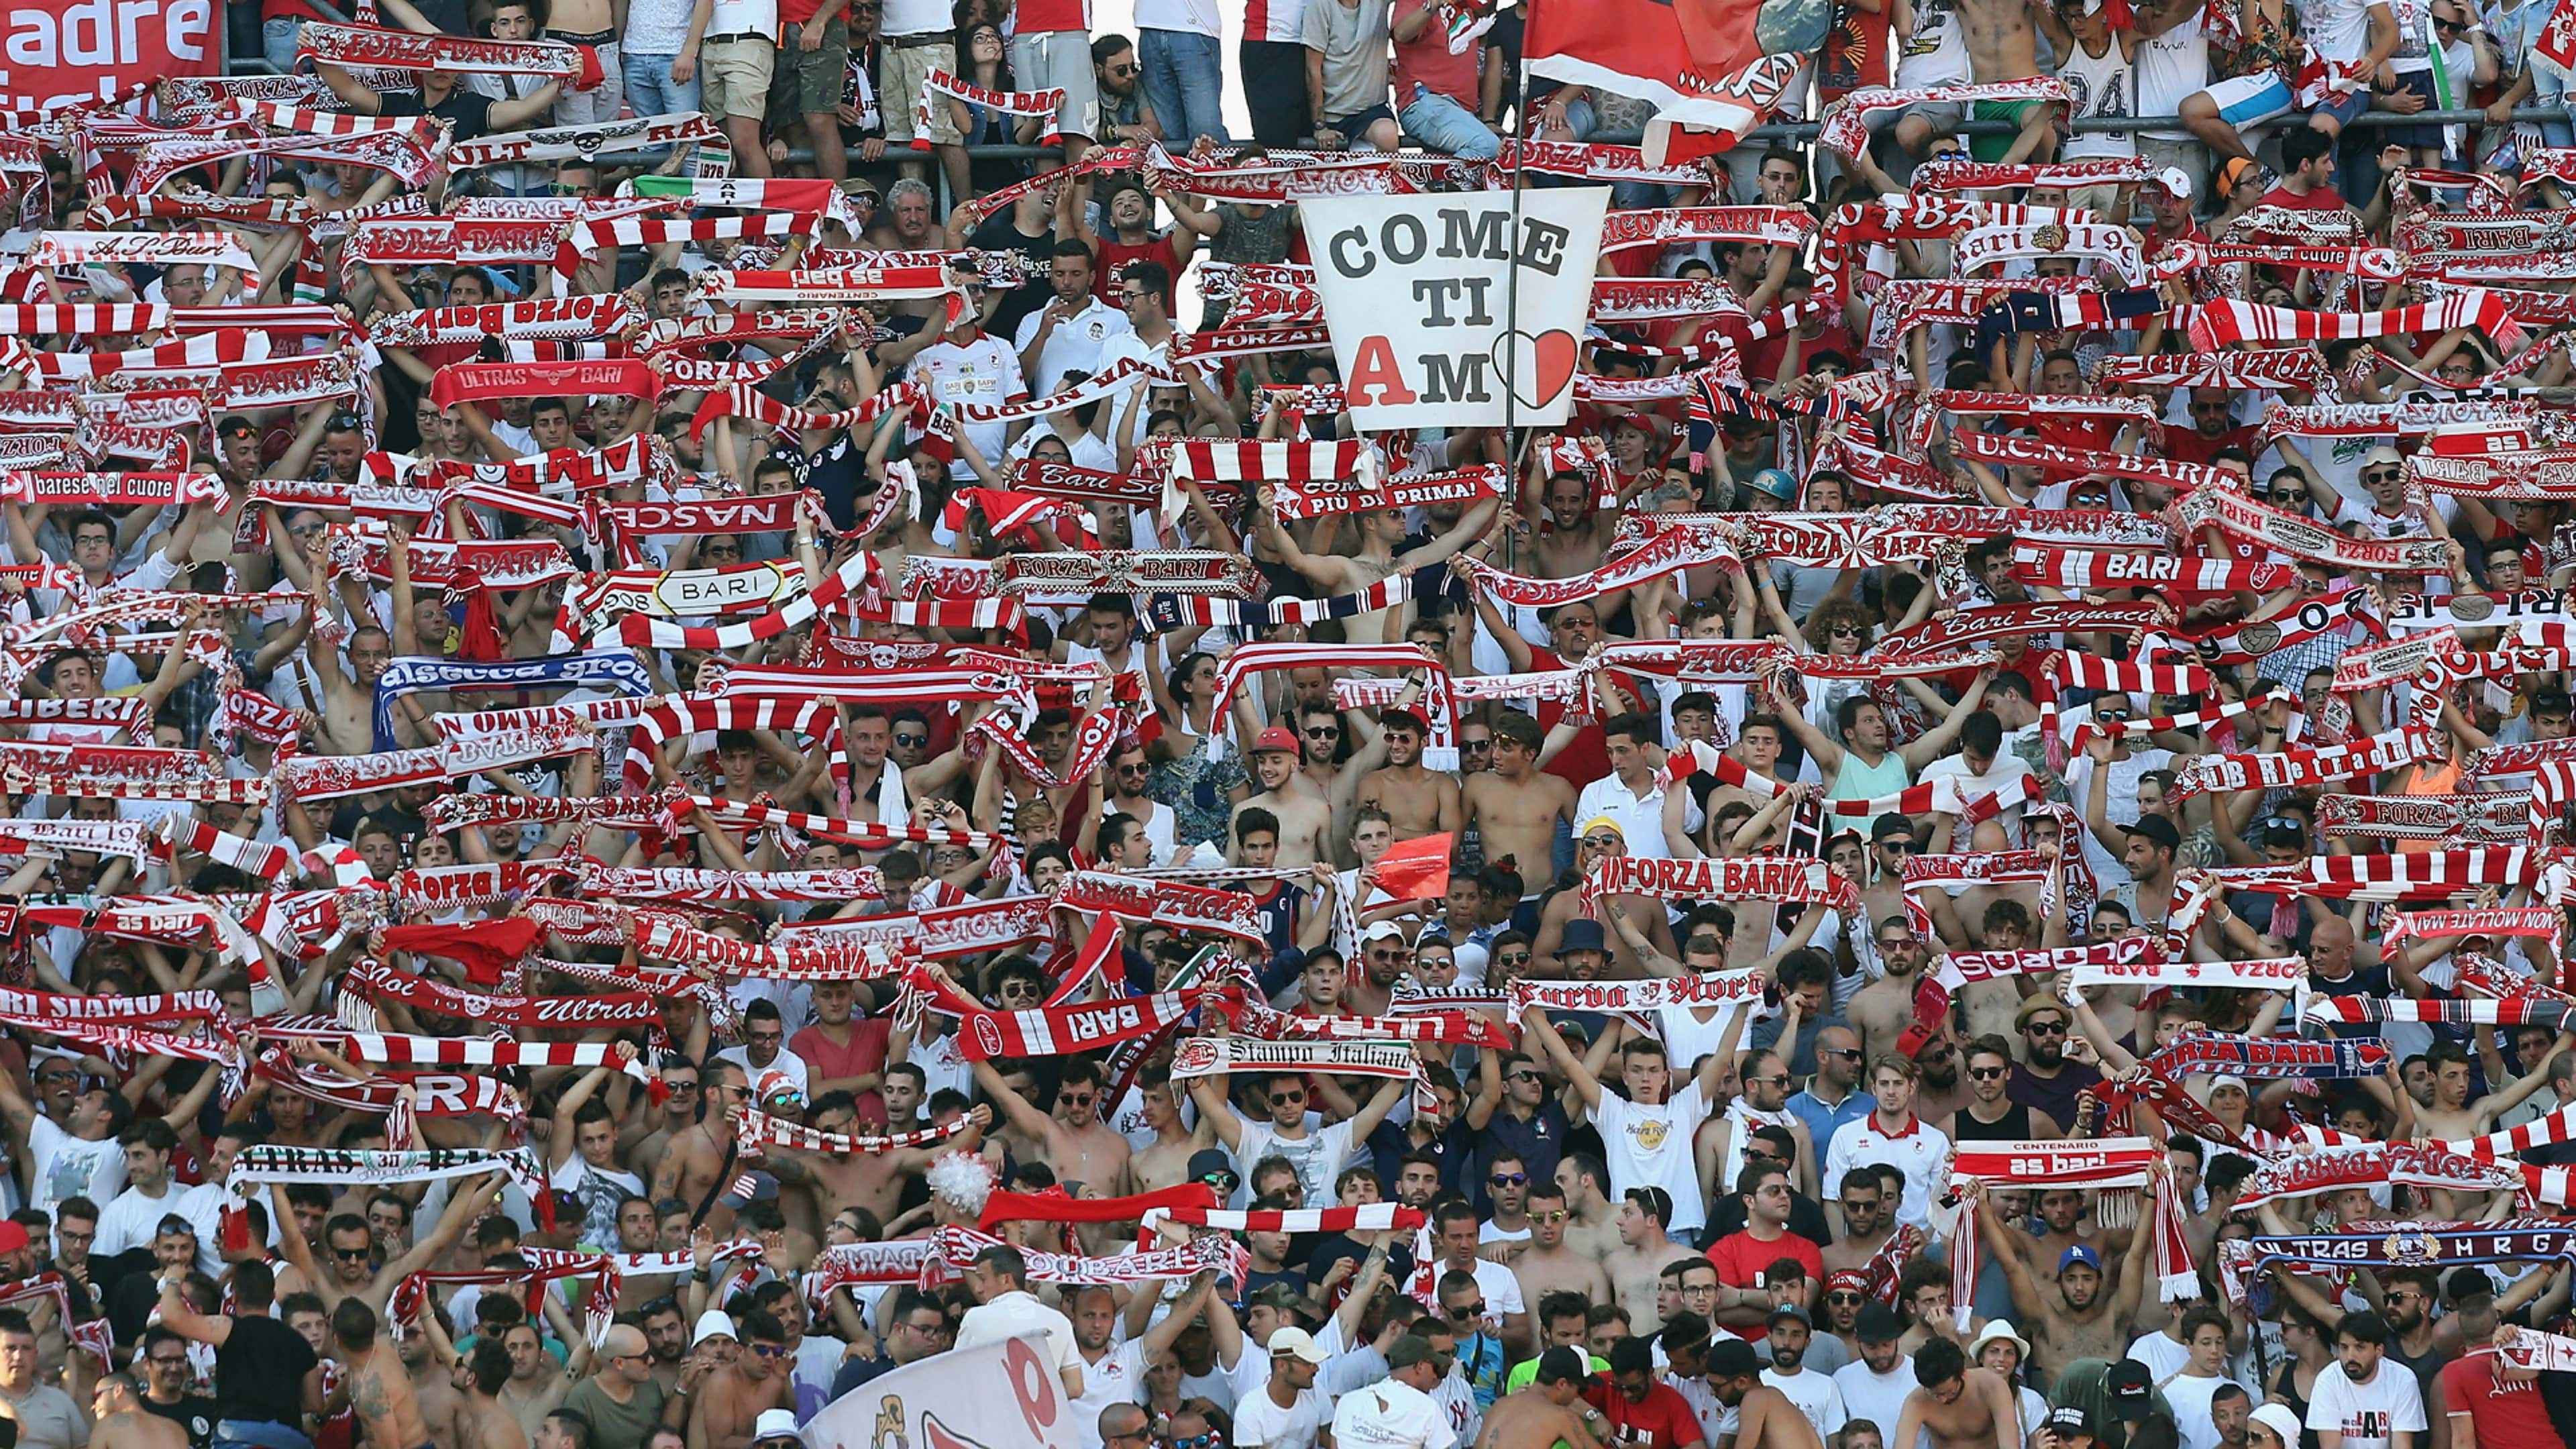 Bari fans